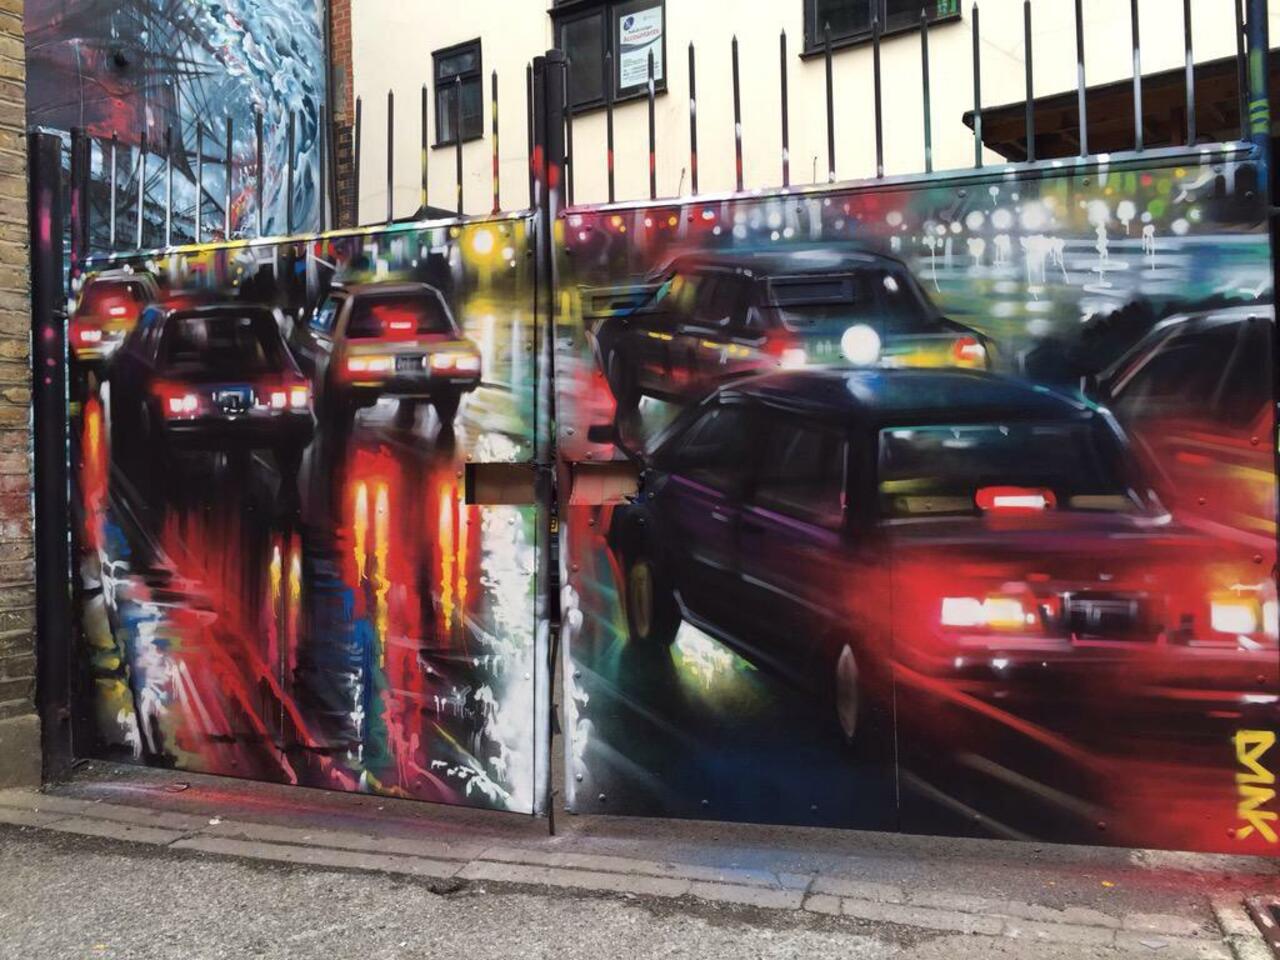 putain quel talentStreet Art @GoogleStreetArt
 @DanKitchener in Brick Lane London 

#art #graffiti #mural #streetart http://t.co/BDNwWvQwdP